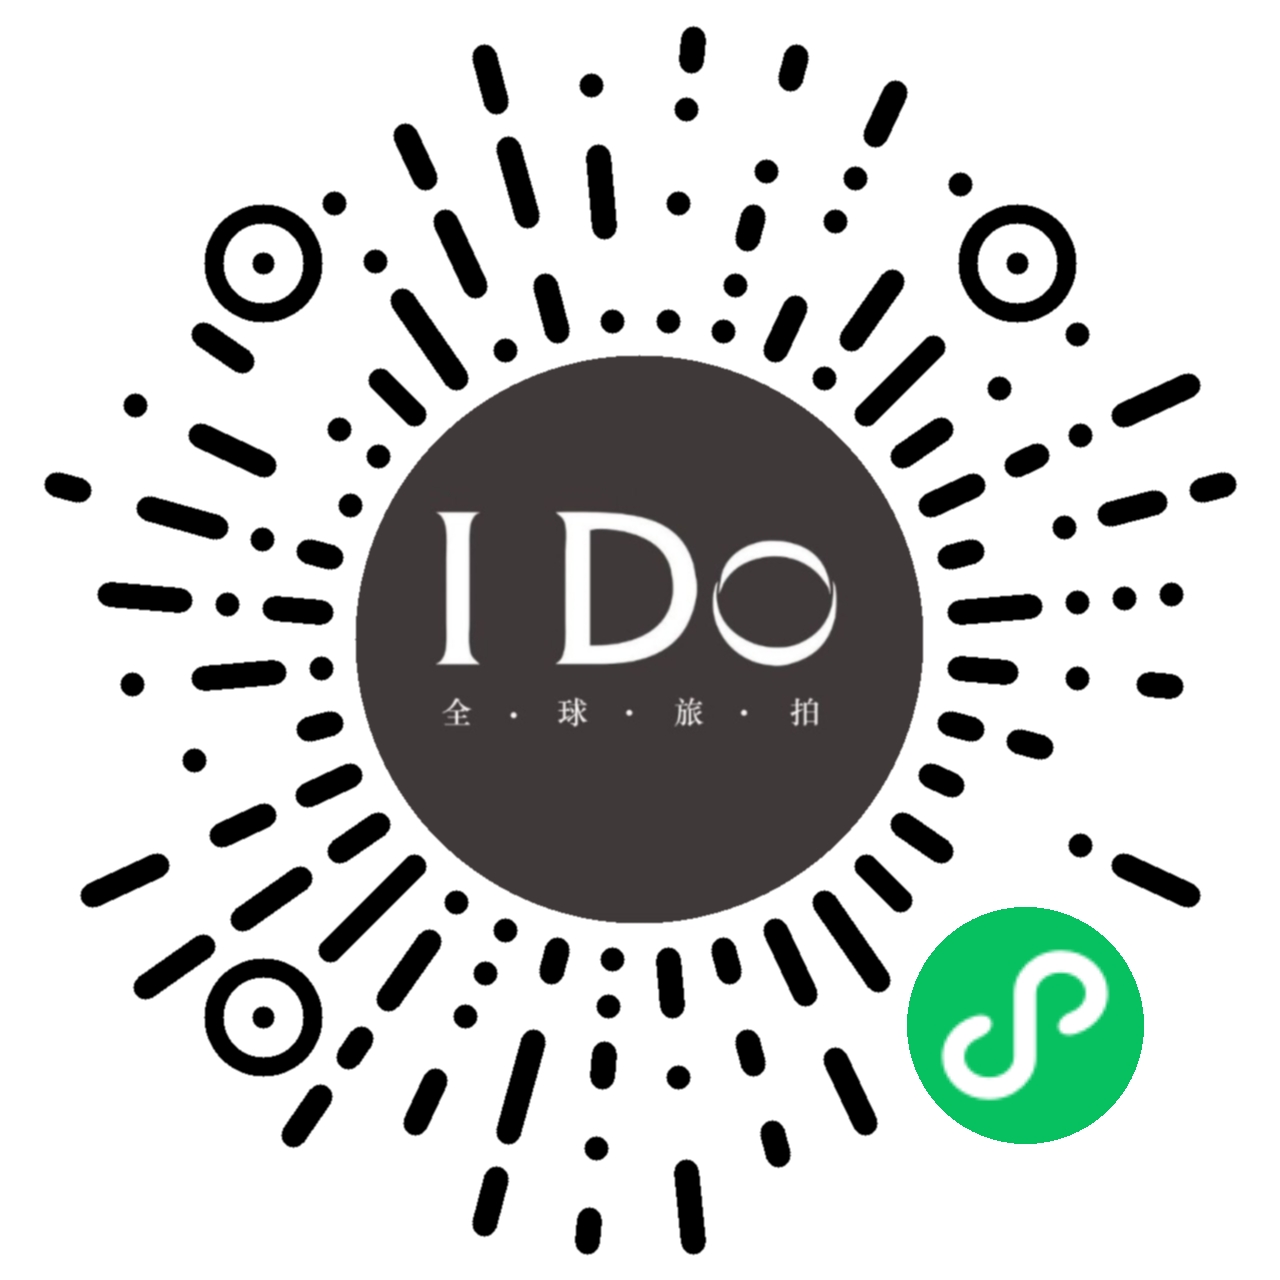 IDO letter logo design on white background. IDO creative initials ...